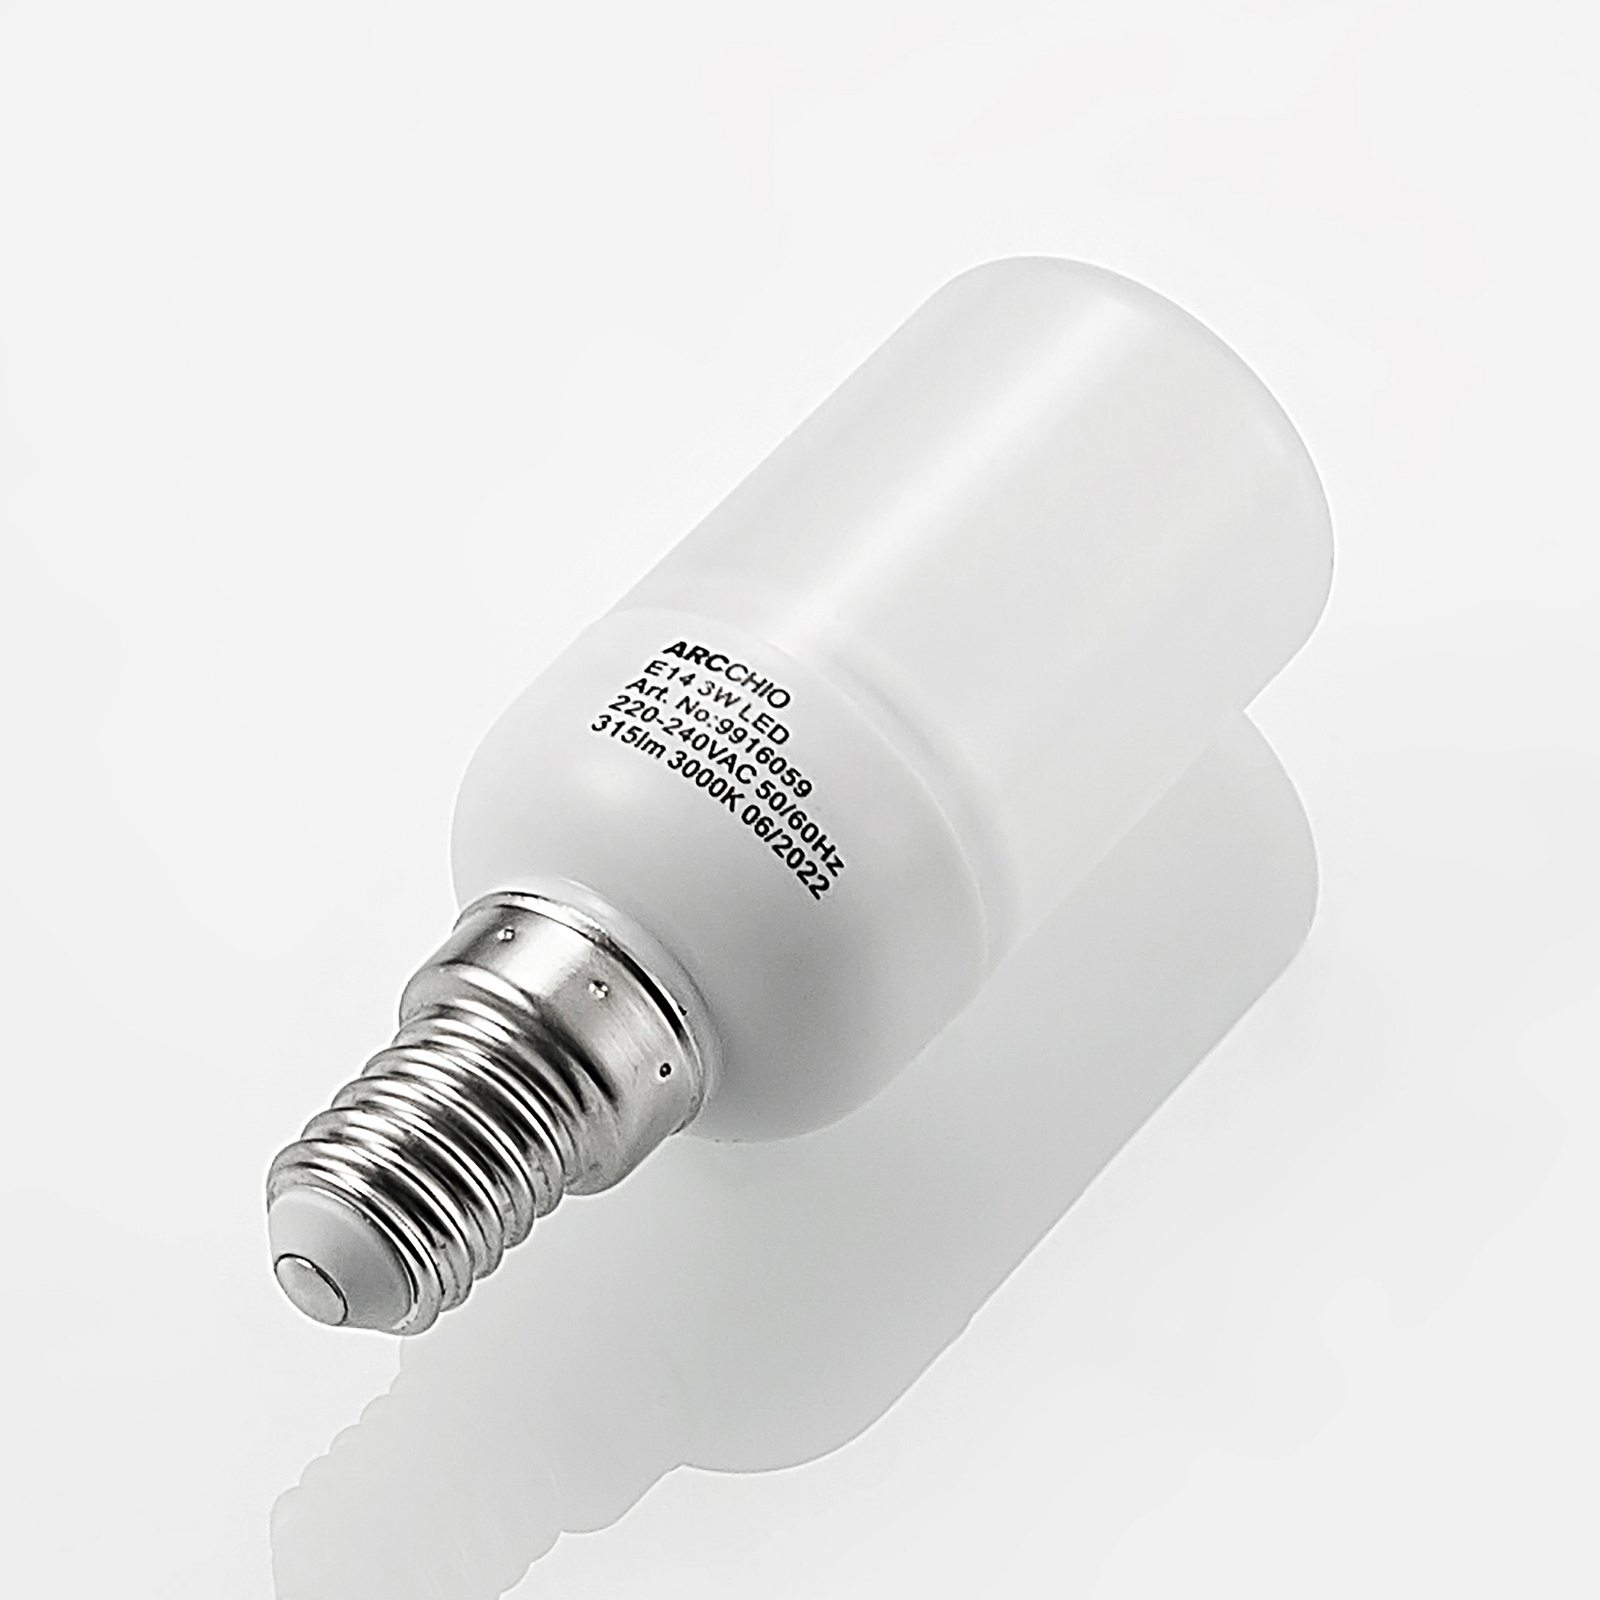 Arcchio ampoule LED tube E14 3 W 3 000 K